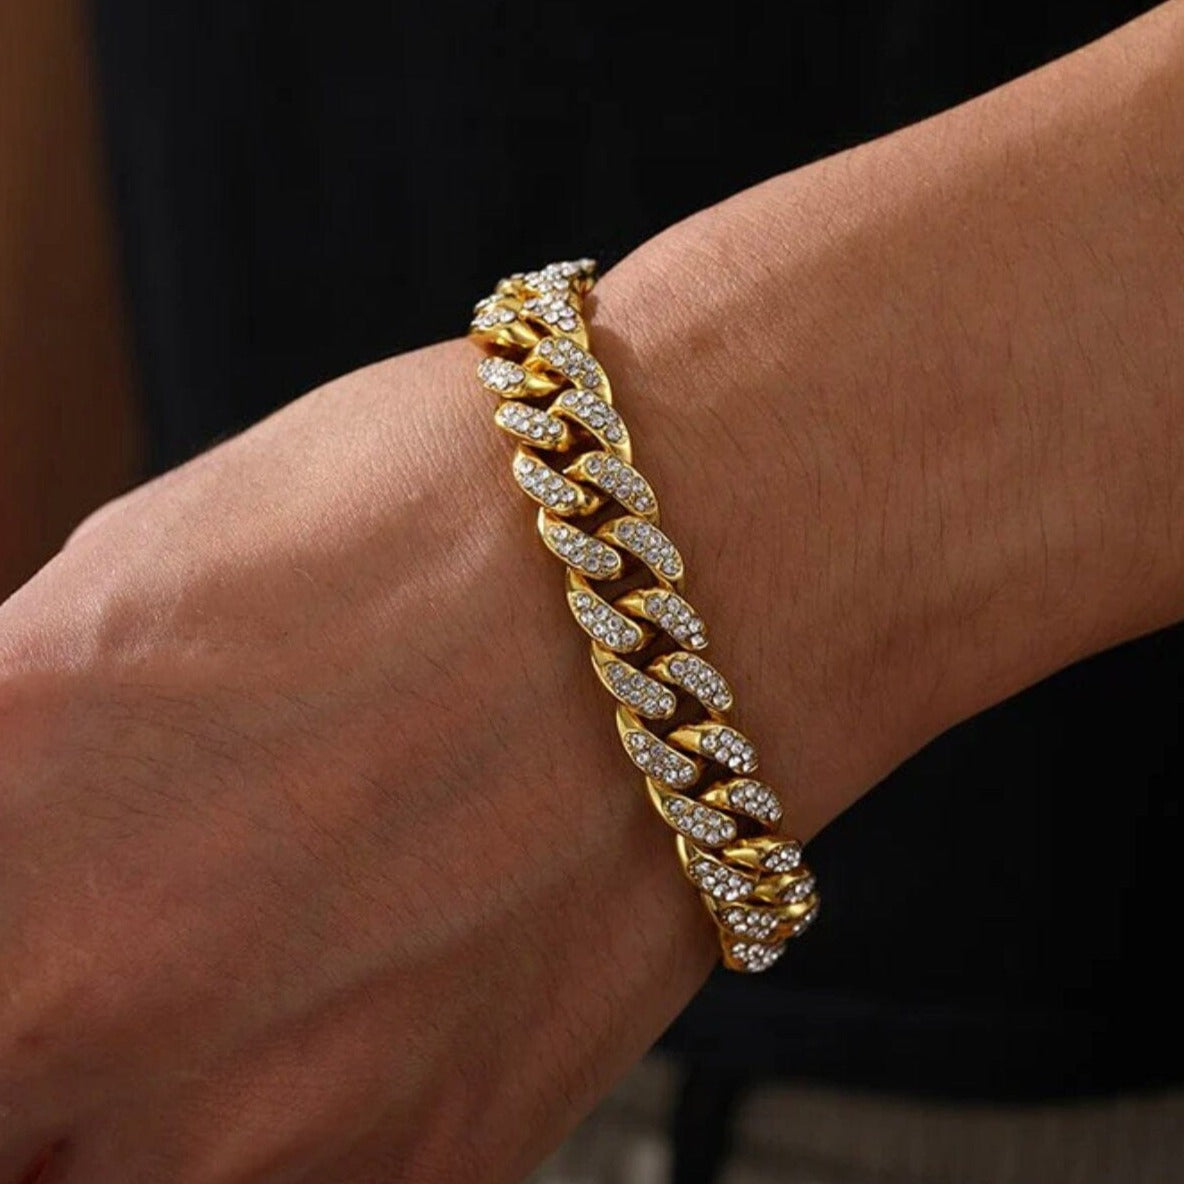 Gold Iced Diamond Miami Cuban Link Chain Bracelet 12MM - 8IN White Gold - Men's Jewelry - Womens Jewelry - VVS Cubic Zirconia